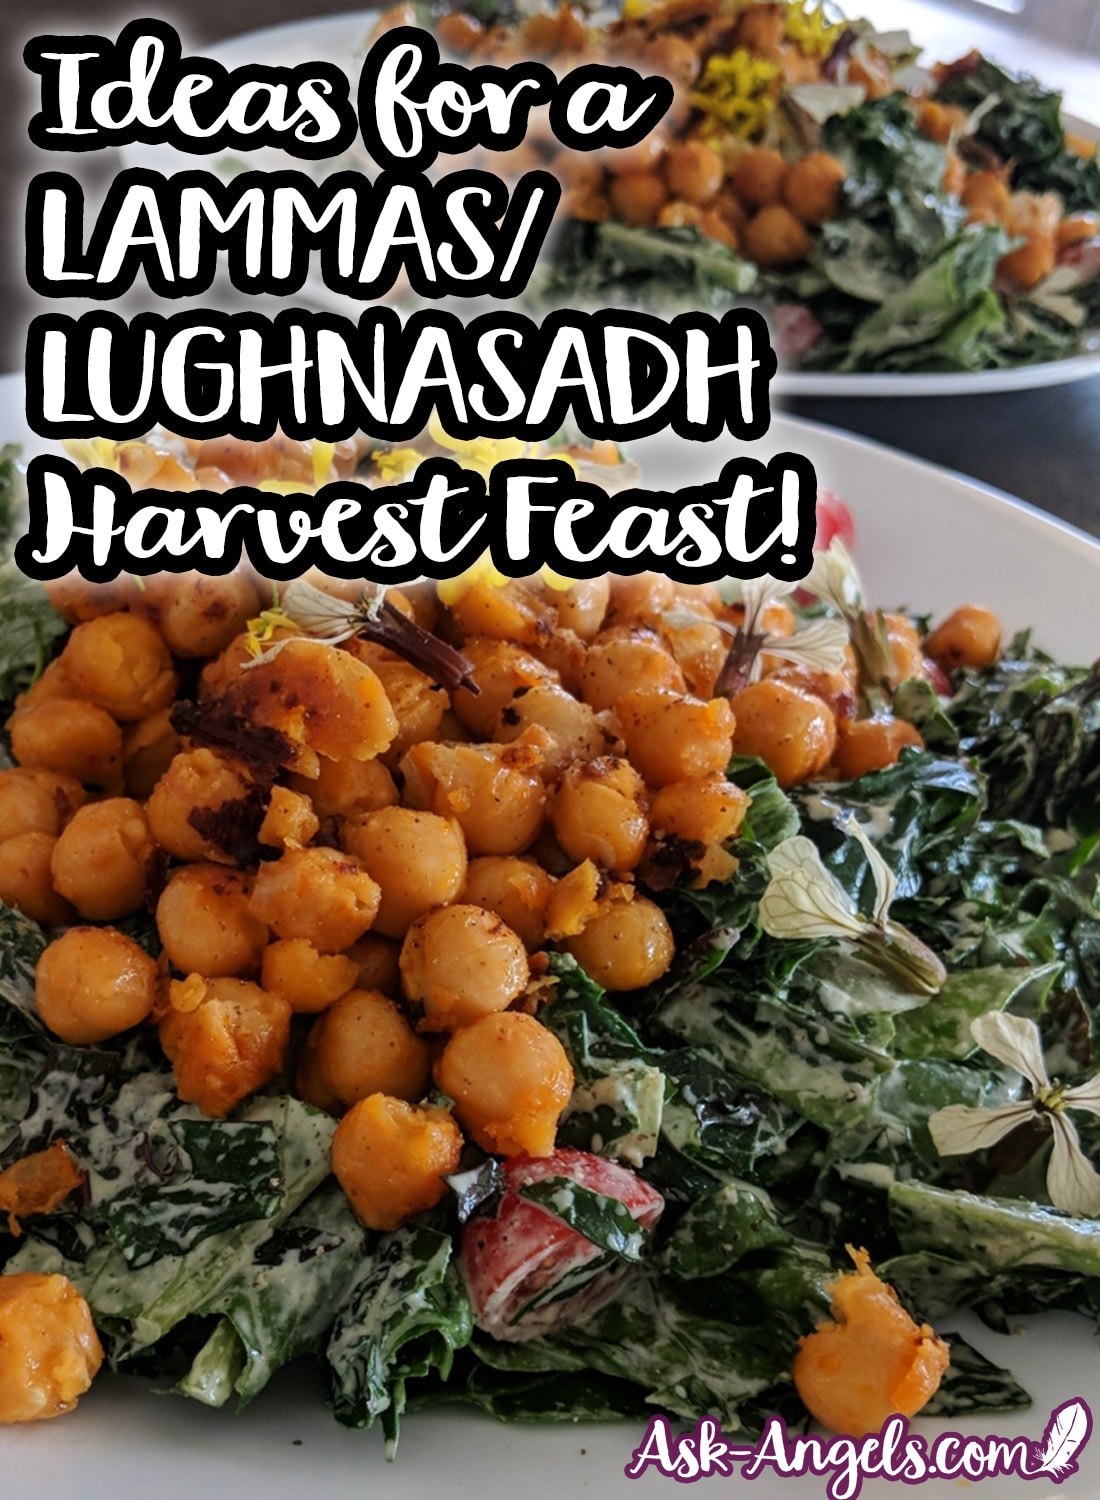 Lughnasadh Harvest Feast